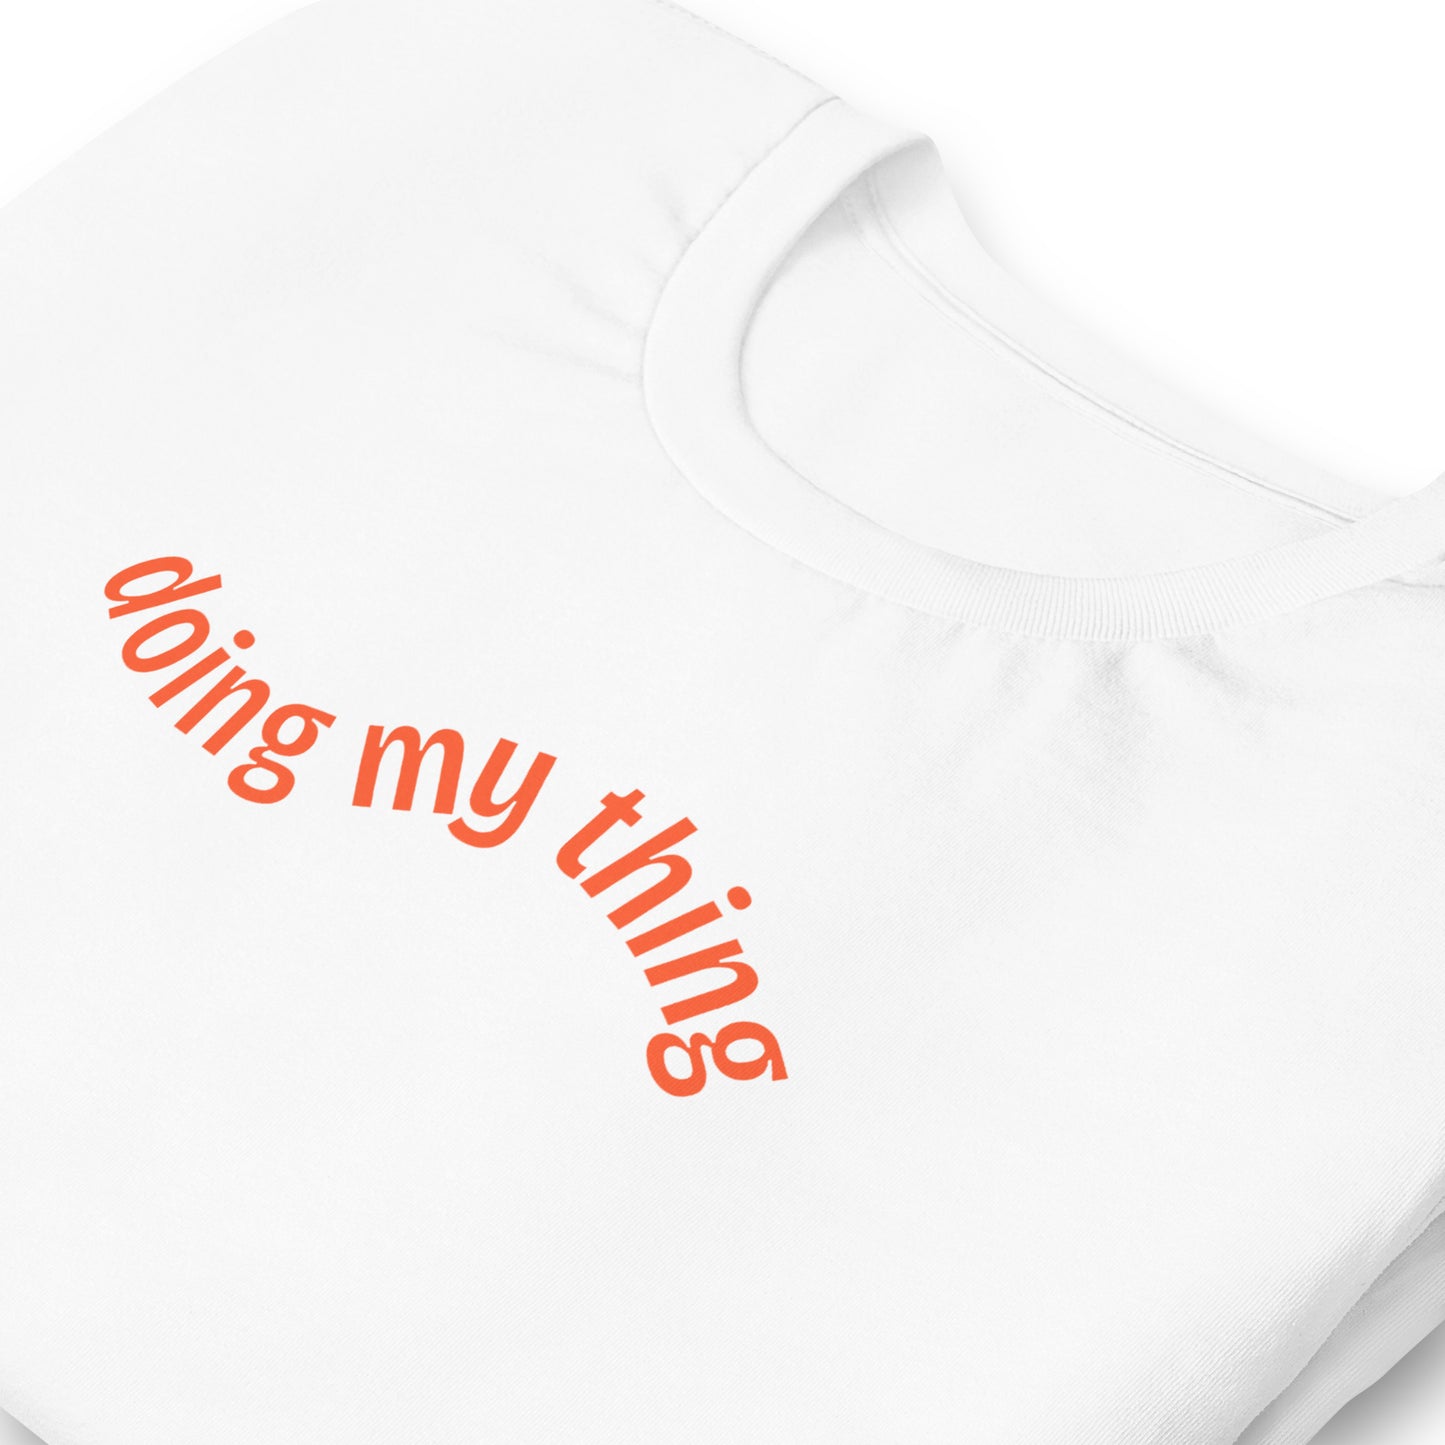 Doing my thing — Unisex t-shirt